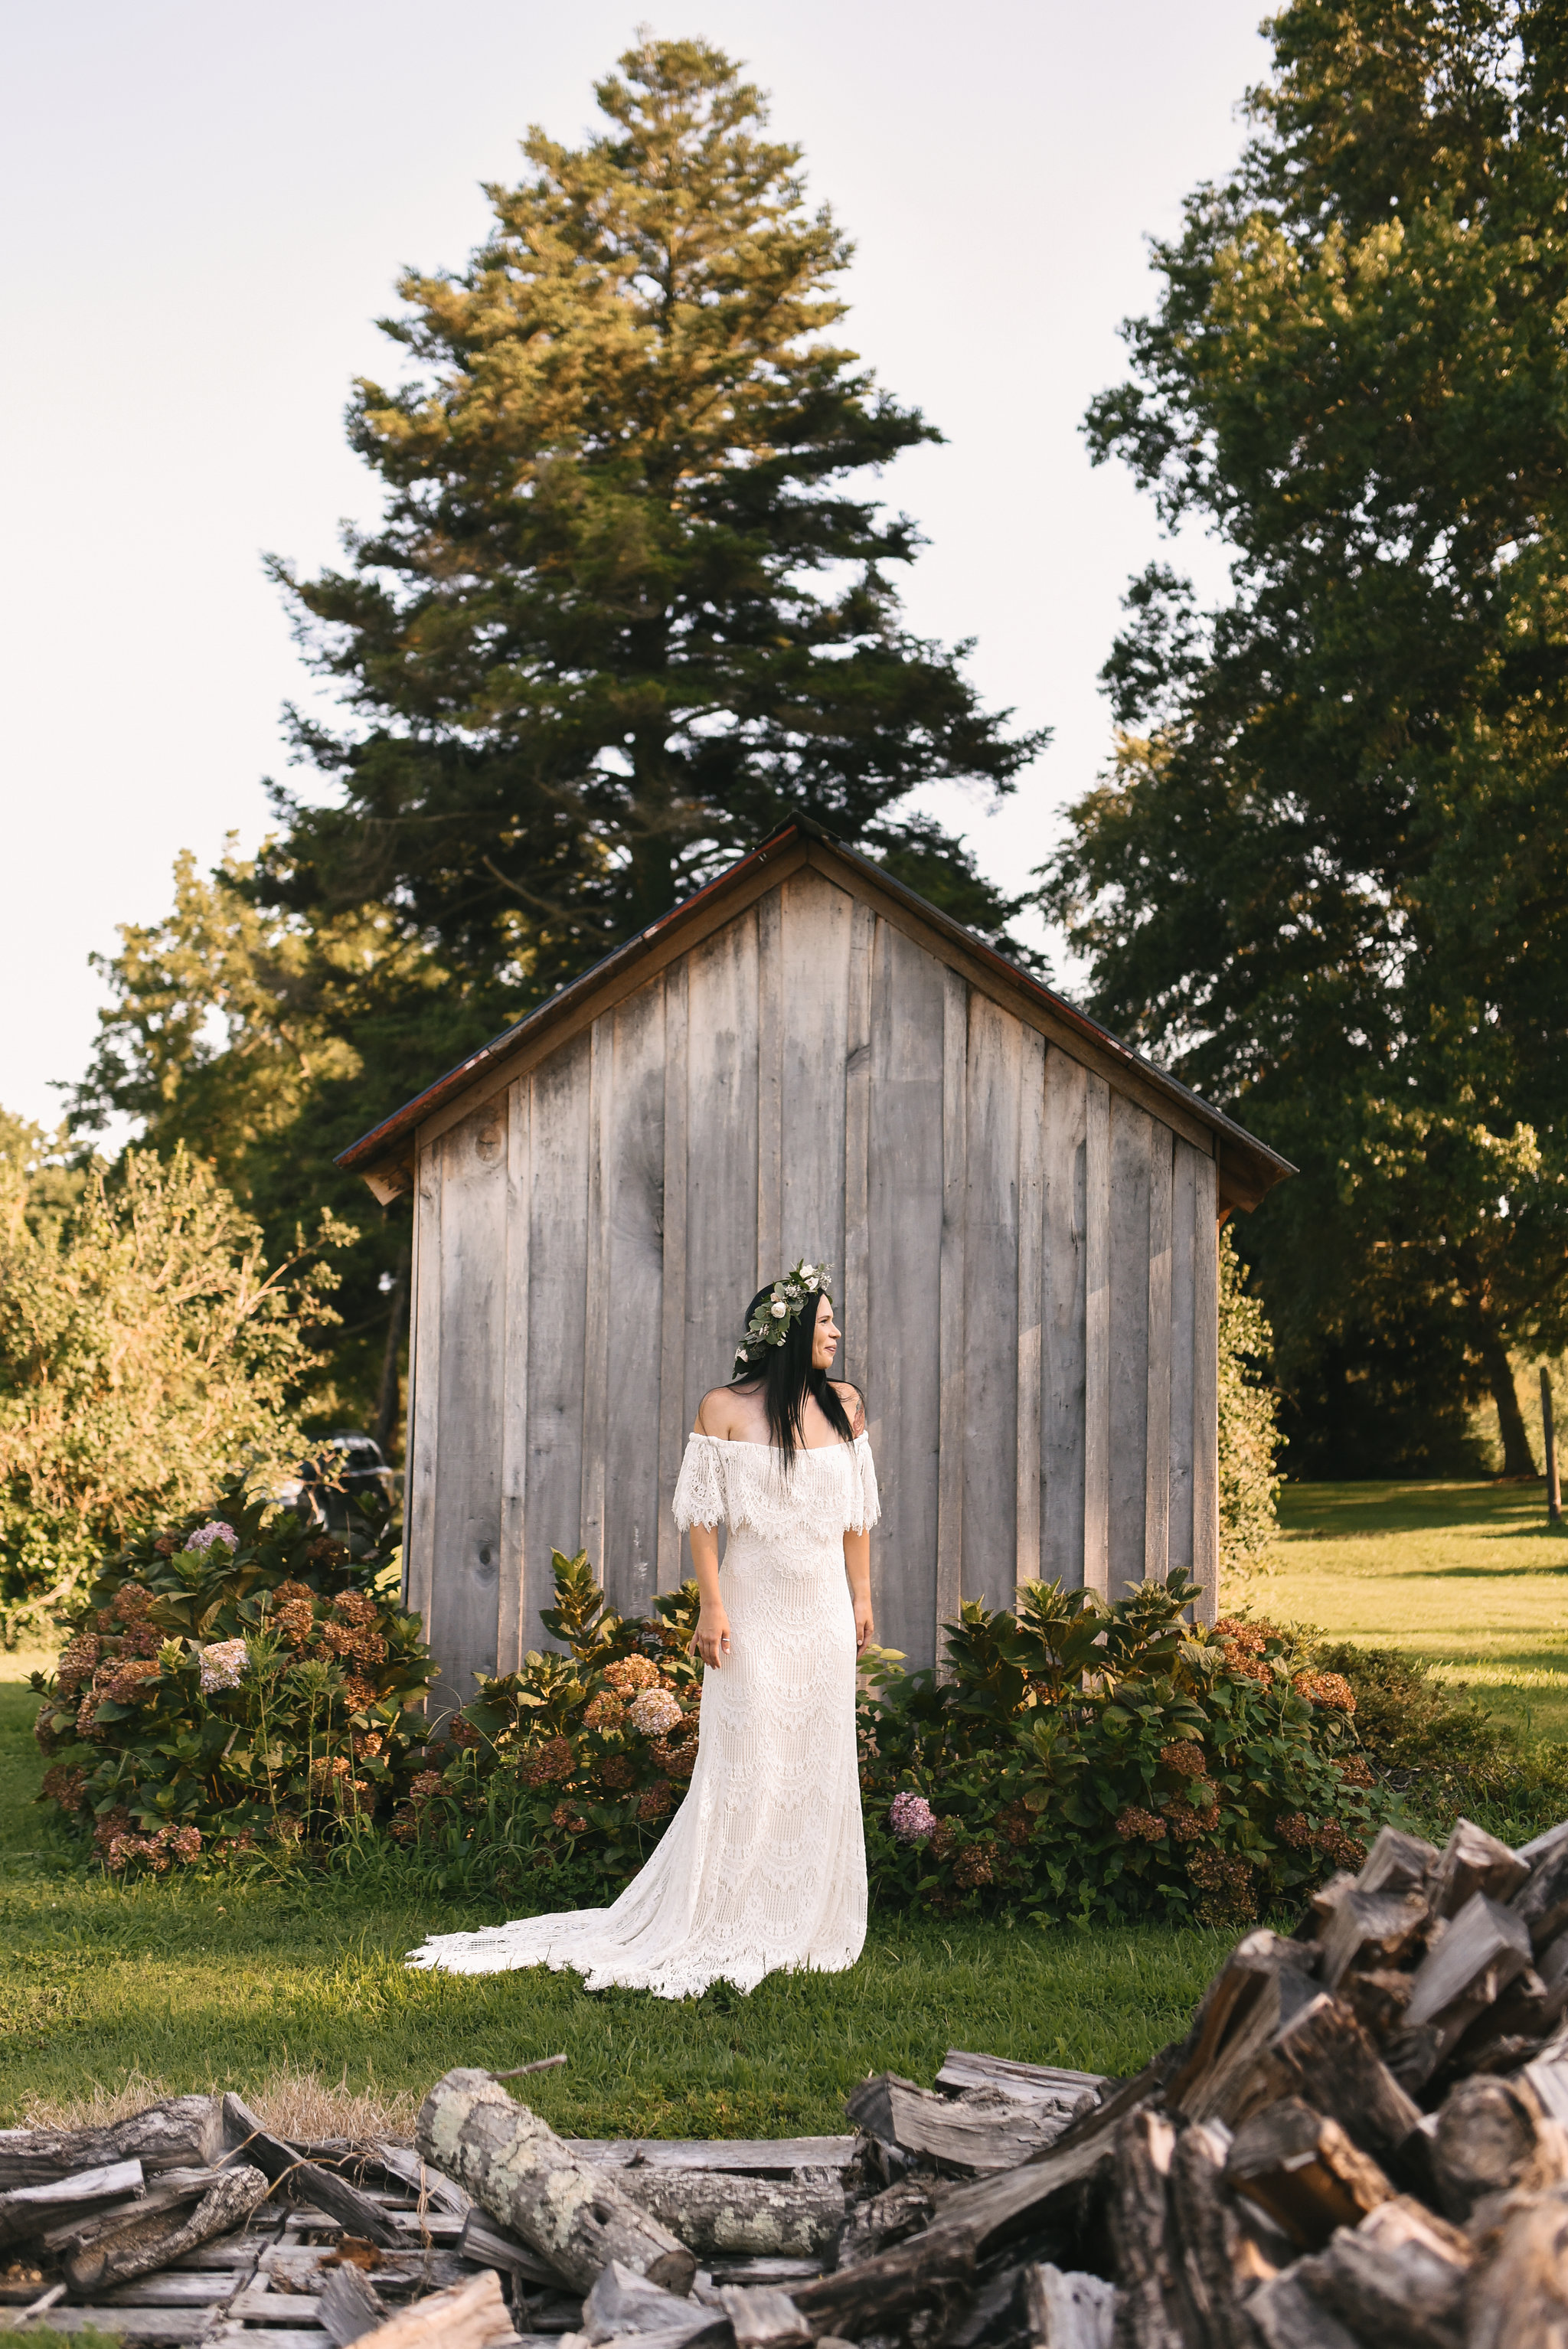  Maryland, Eastern Shore, Baltimore Wedding Photographer, Romantic, Boho, Backyard Wedding, Nature, Portrait of Bride Outside, Daughters of Simone Wedding Dress, Flower Crown 